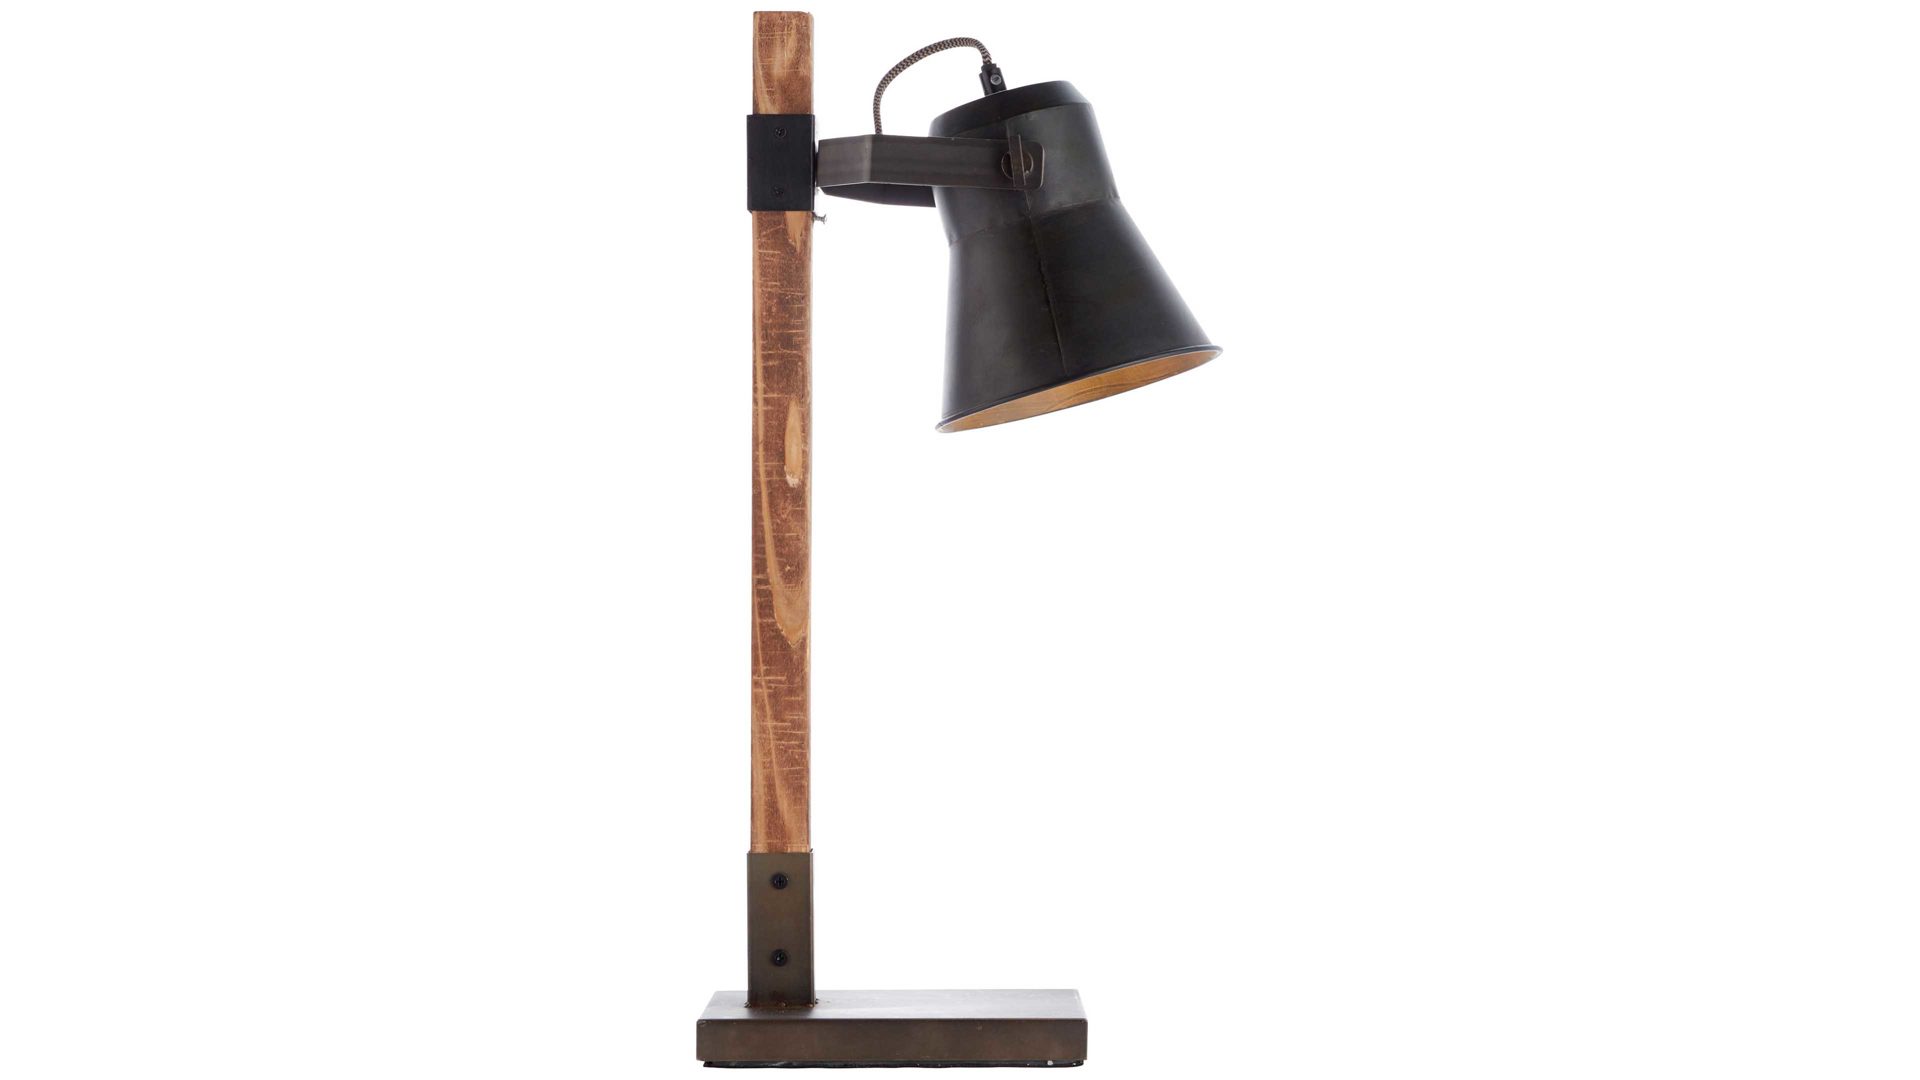 Brilliant Tischlampe Plow, schwarzer – cm, Höhe 55 ca. Lamstedt, Bremerhaven Holz & Cuxhaven, Stahl